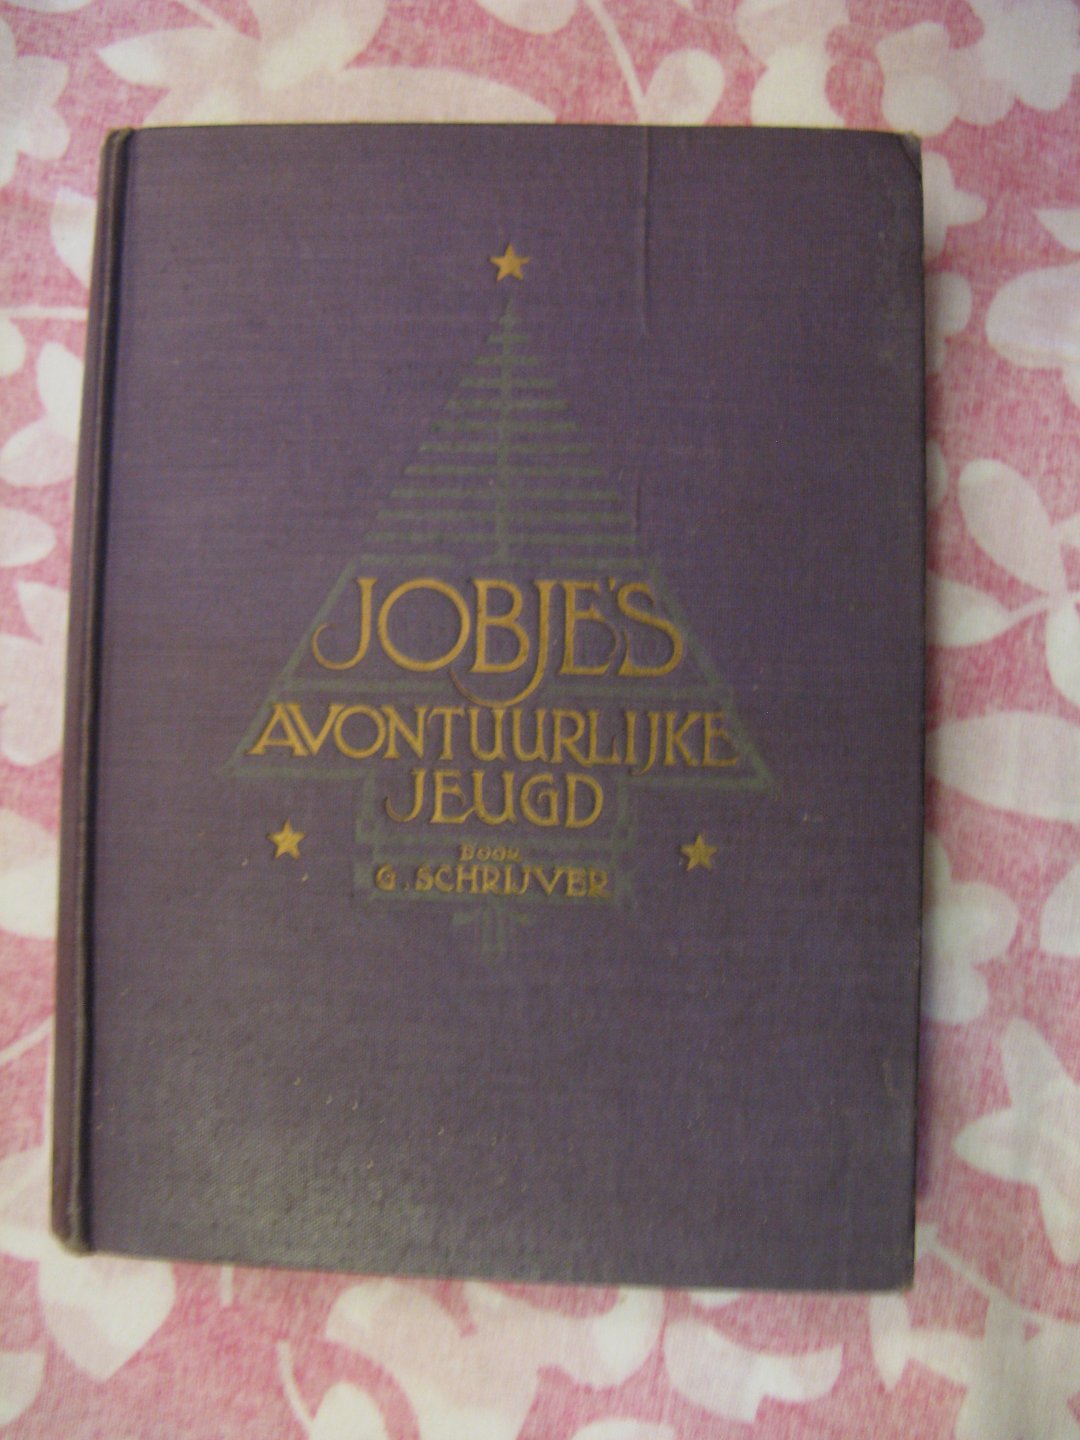 schrijver, G. - Jobje's avontuurlijke jeugd